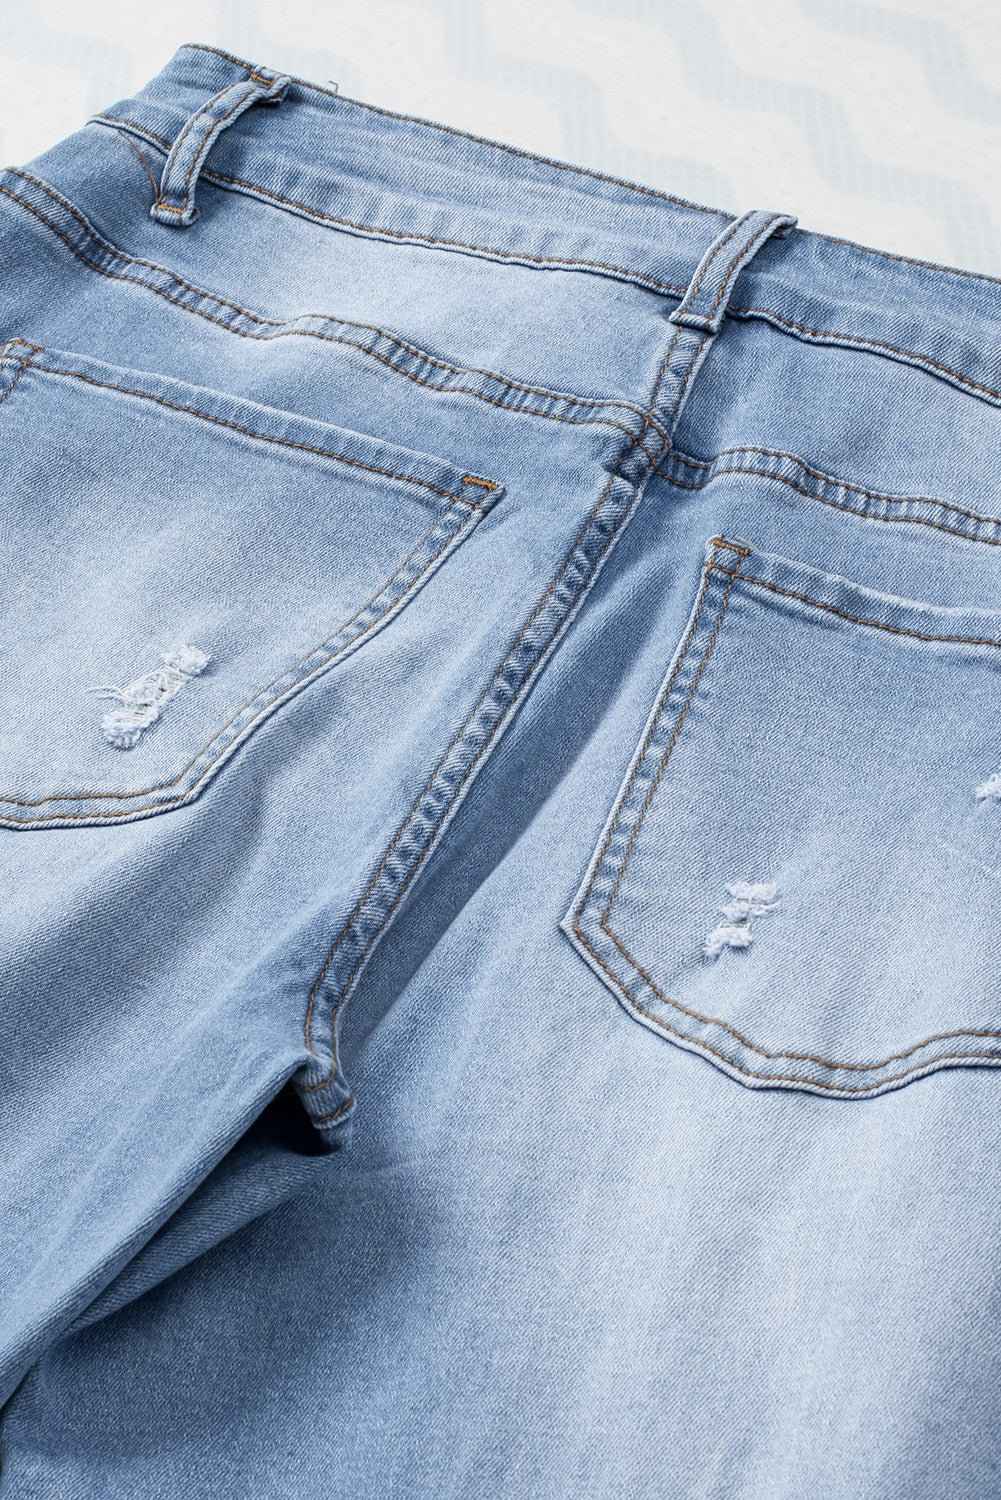 Sky Blue Buttoned Pockets Distressed Jeans Jeans JT's Designer Fashion